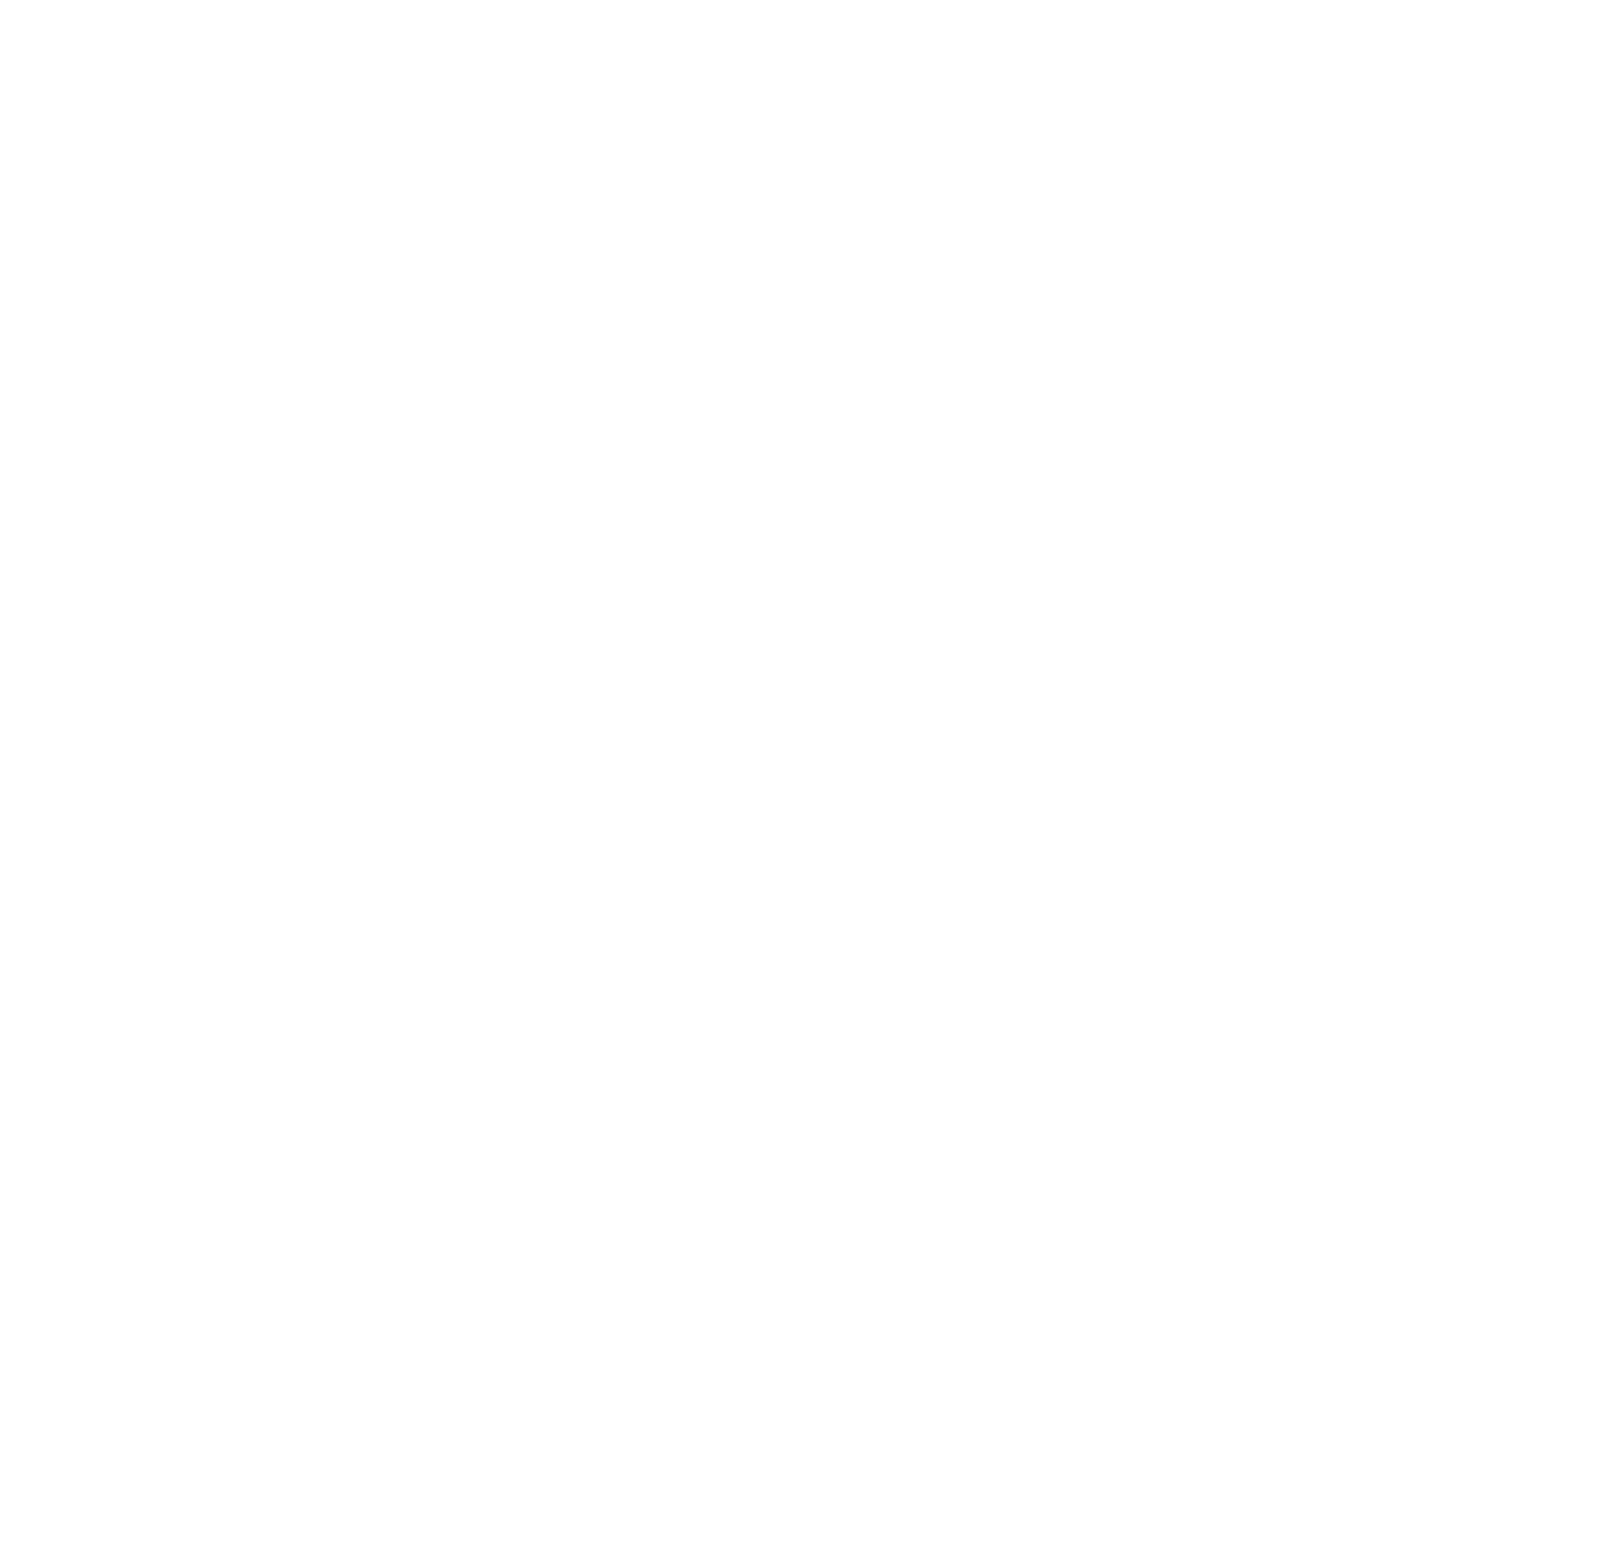 Regal Financial Group